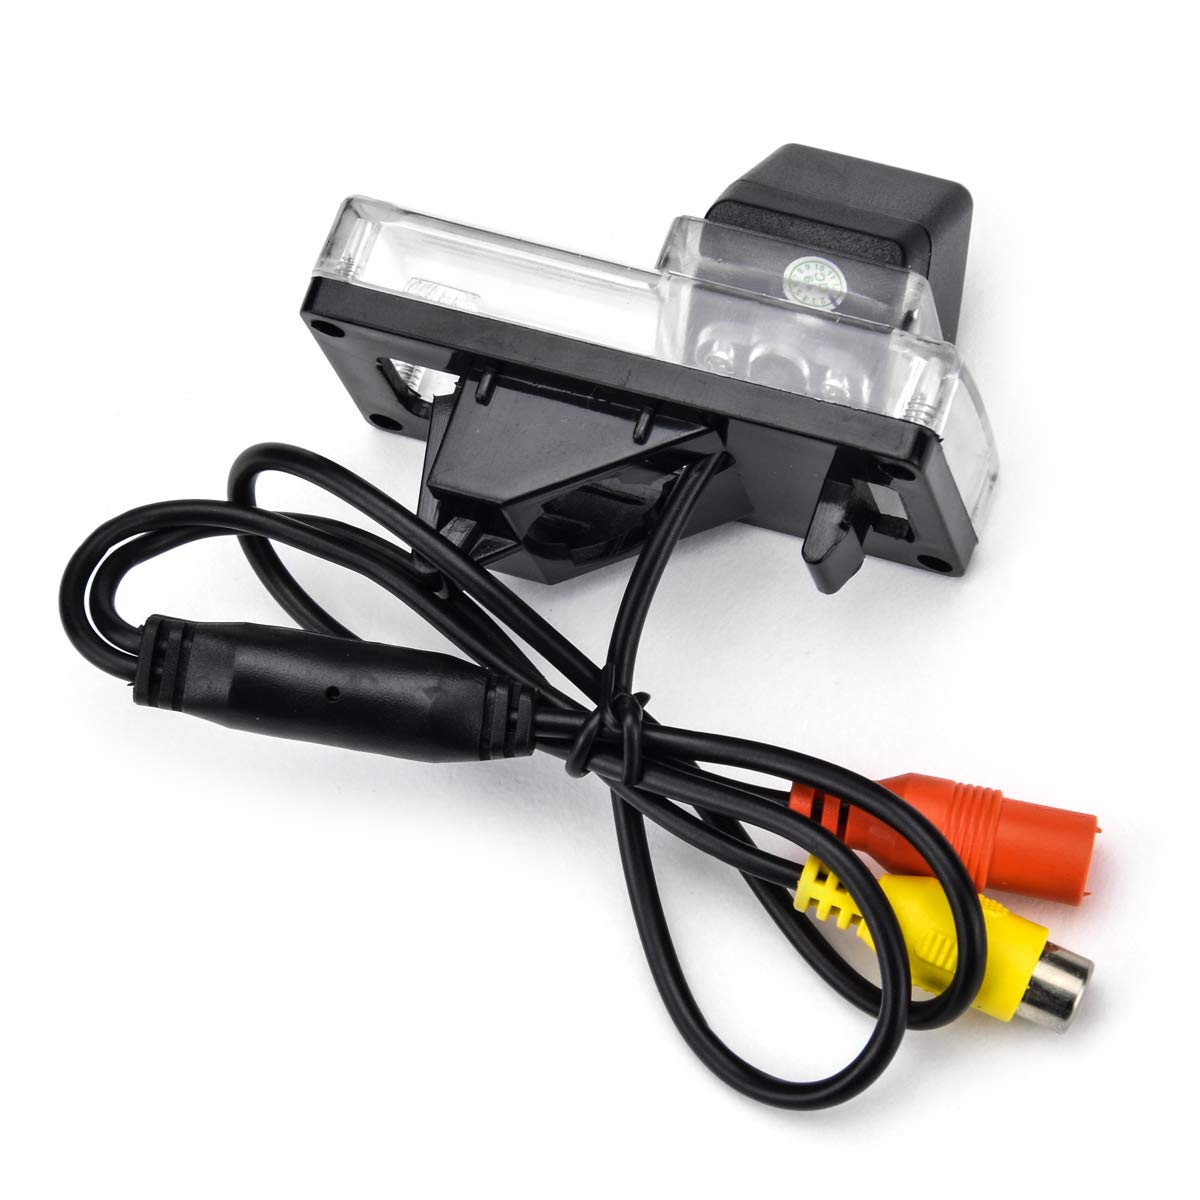 aSATAH 12 LED Car Rear View Camera for Toyota Reiz/Mark X MarkX/Prius/Toyota Land Cruiser LC100 LC120 LC200 Prado & Waterproof and Shockproof Reversing Backup Camera (12 LED)